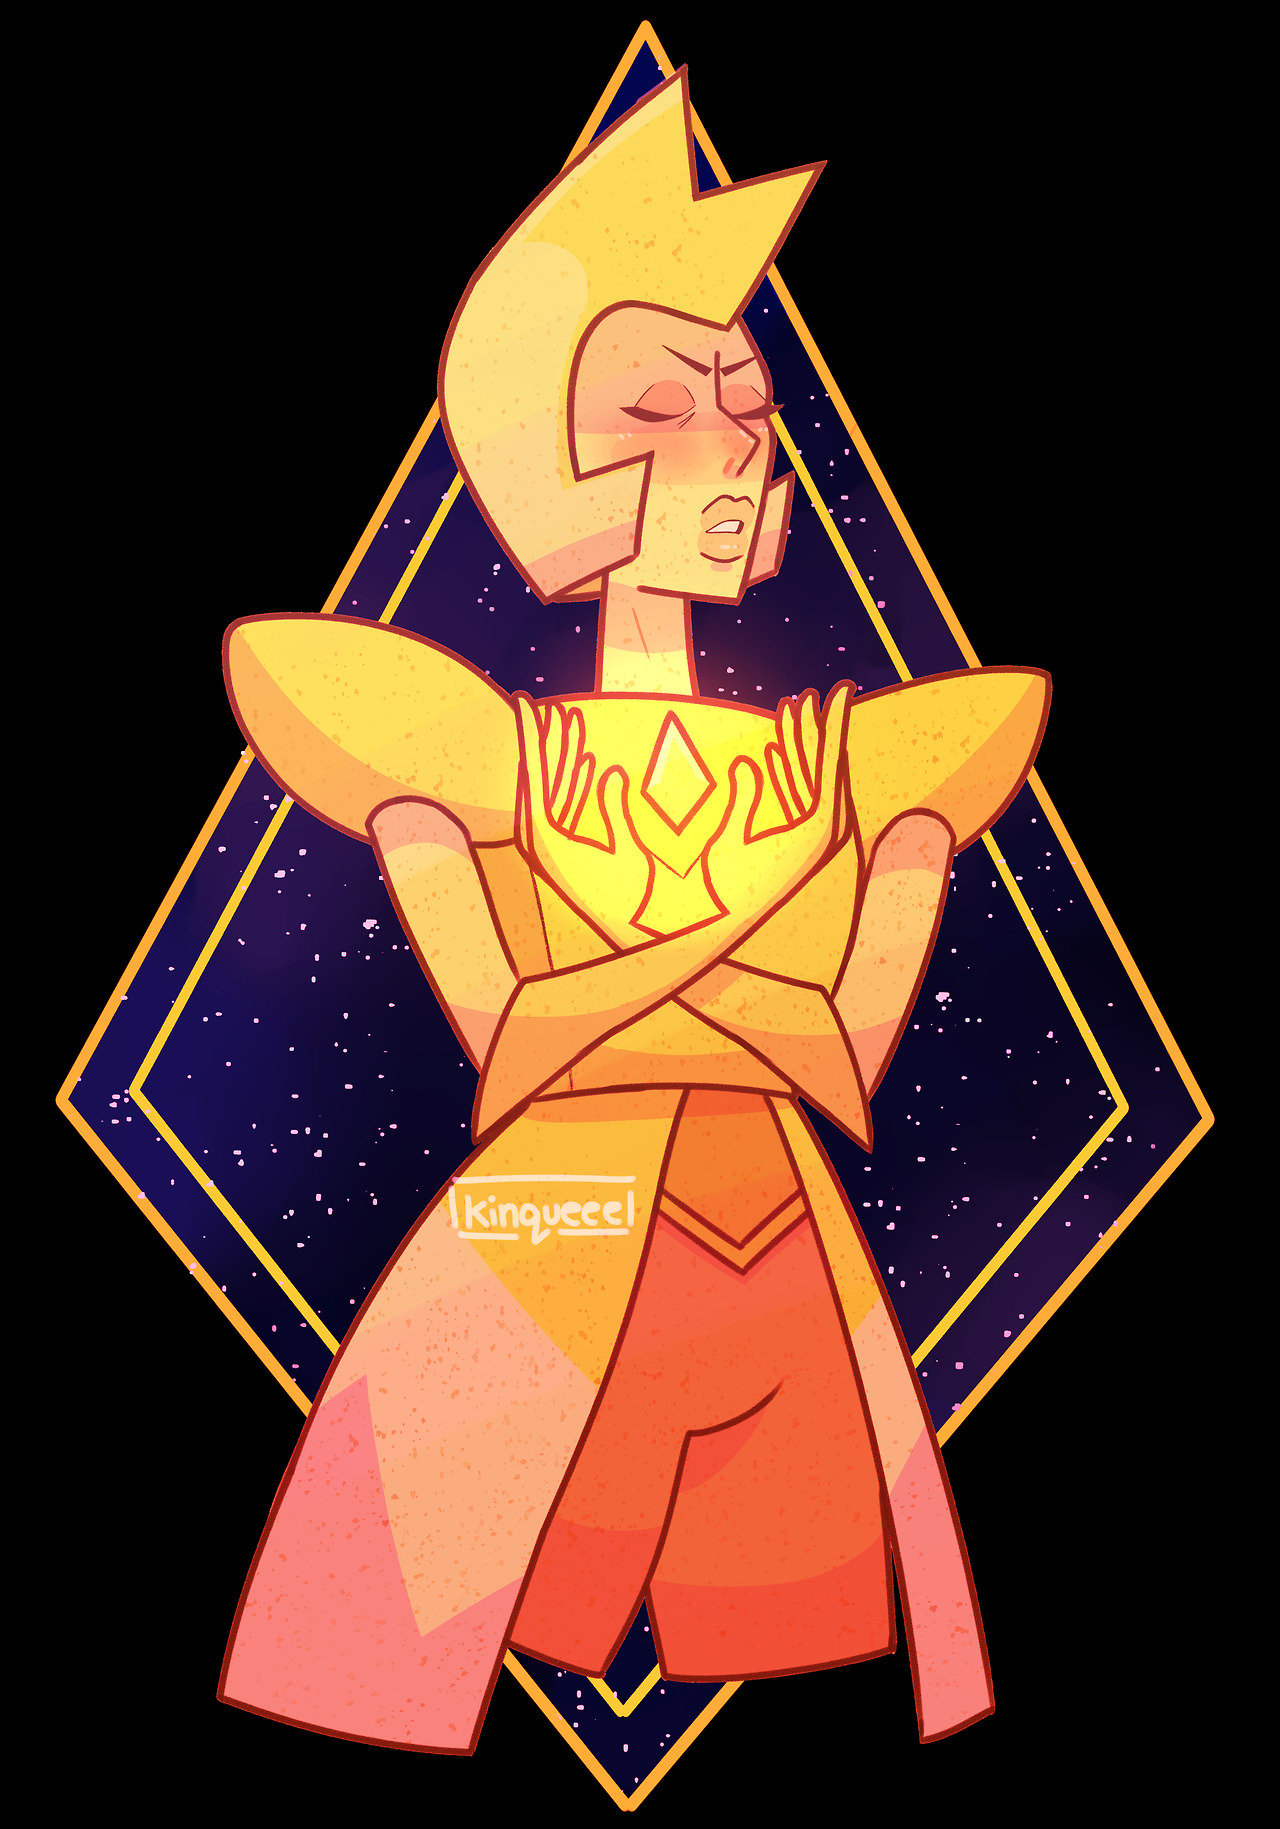 y… yes my Diamond?